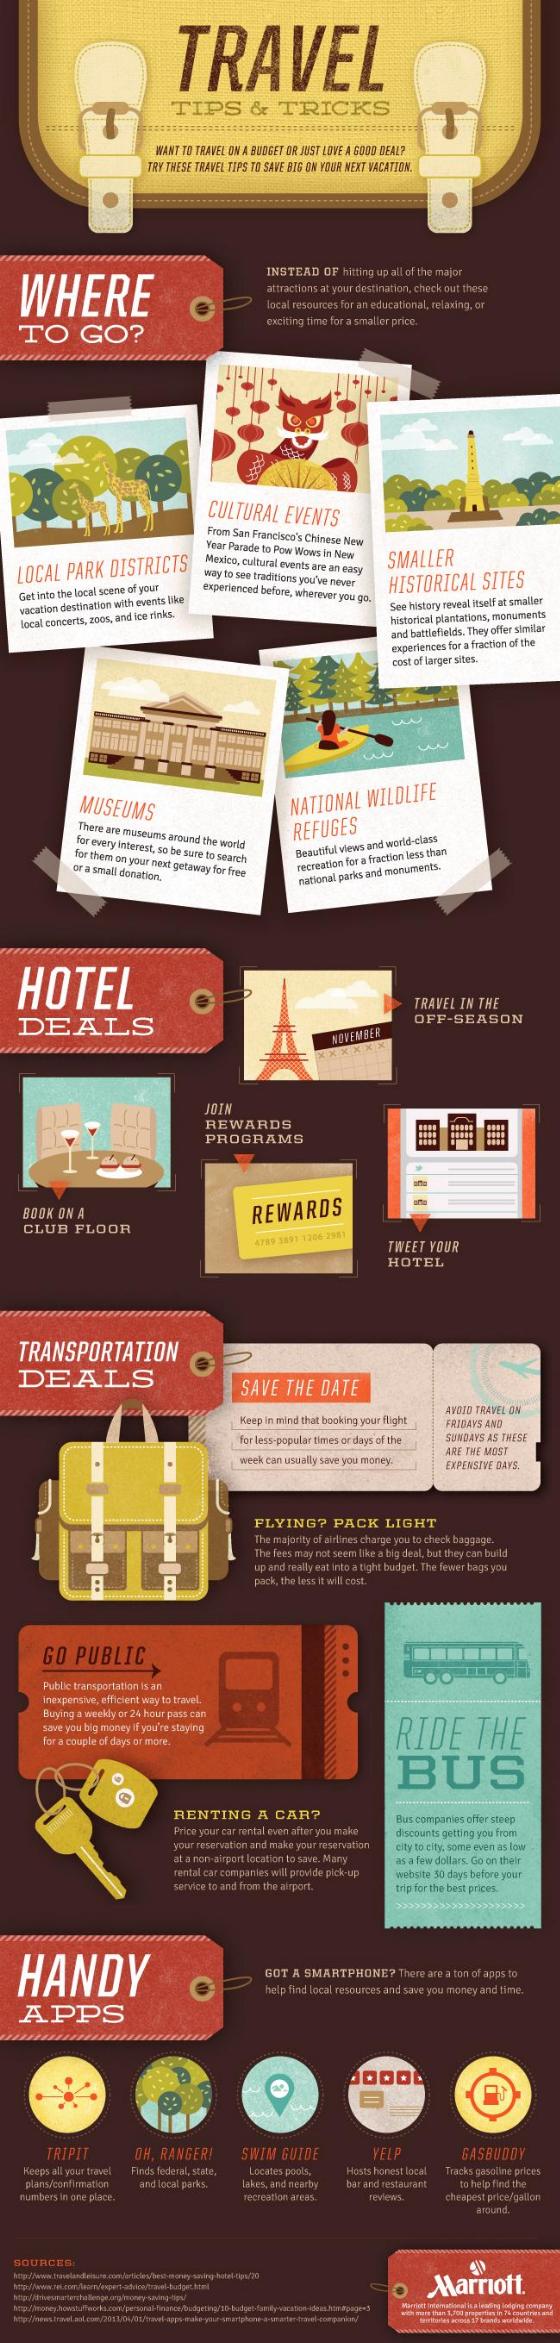 Travel_Tips_Tricks-Infographic_